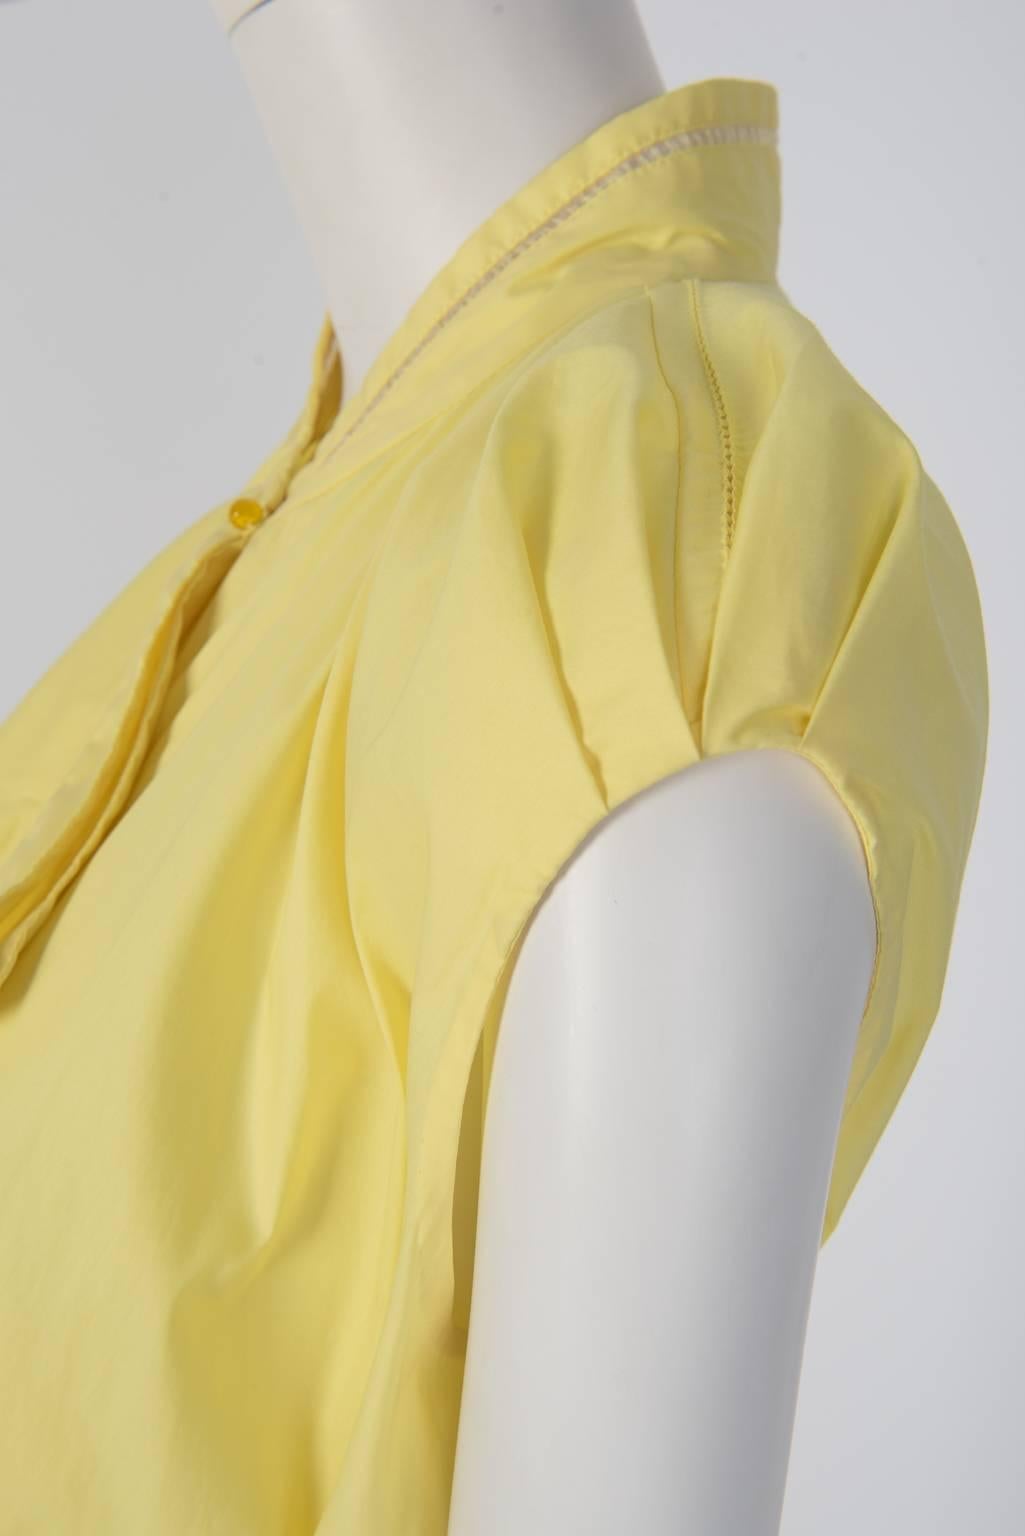  ZAC POSEN Yellow Sun Dress For Sale 2